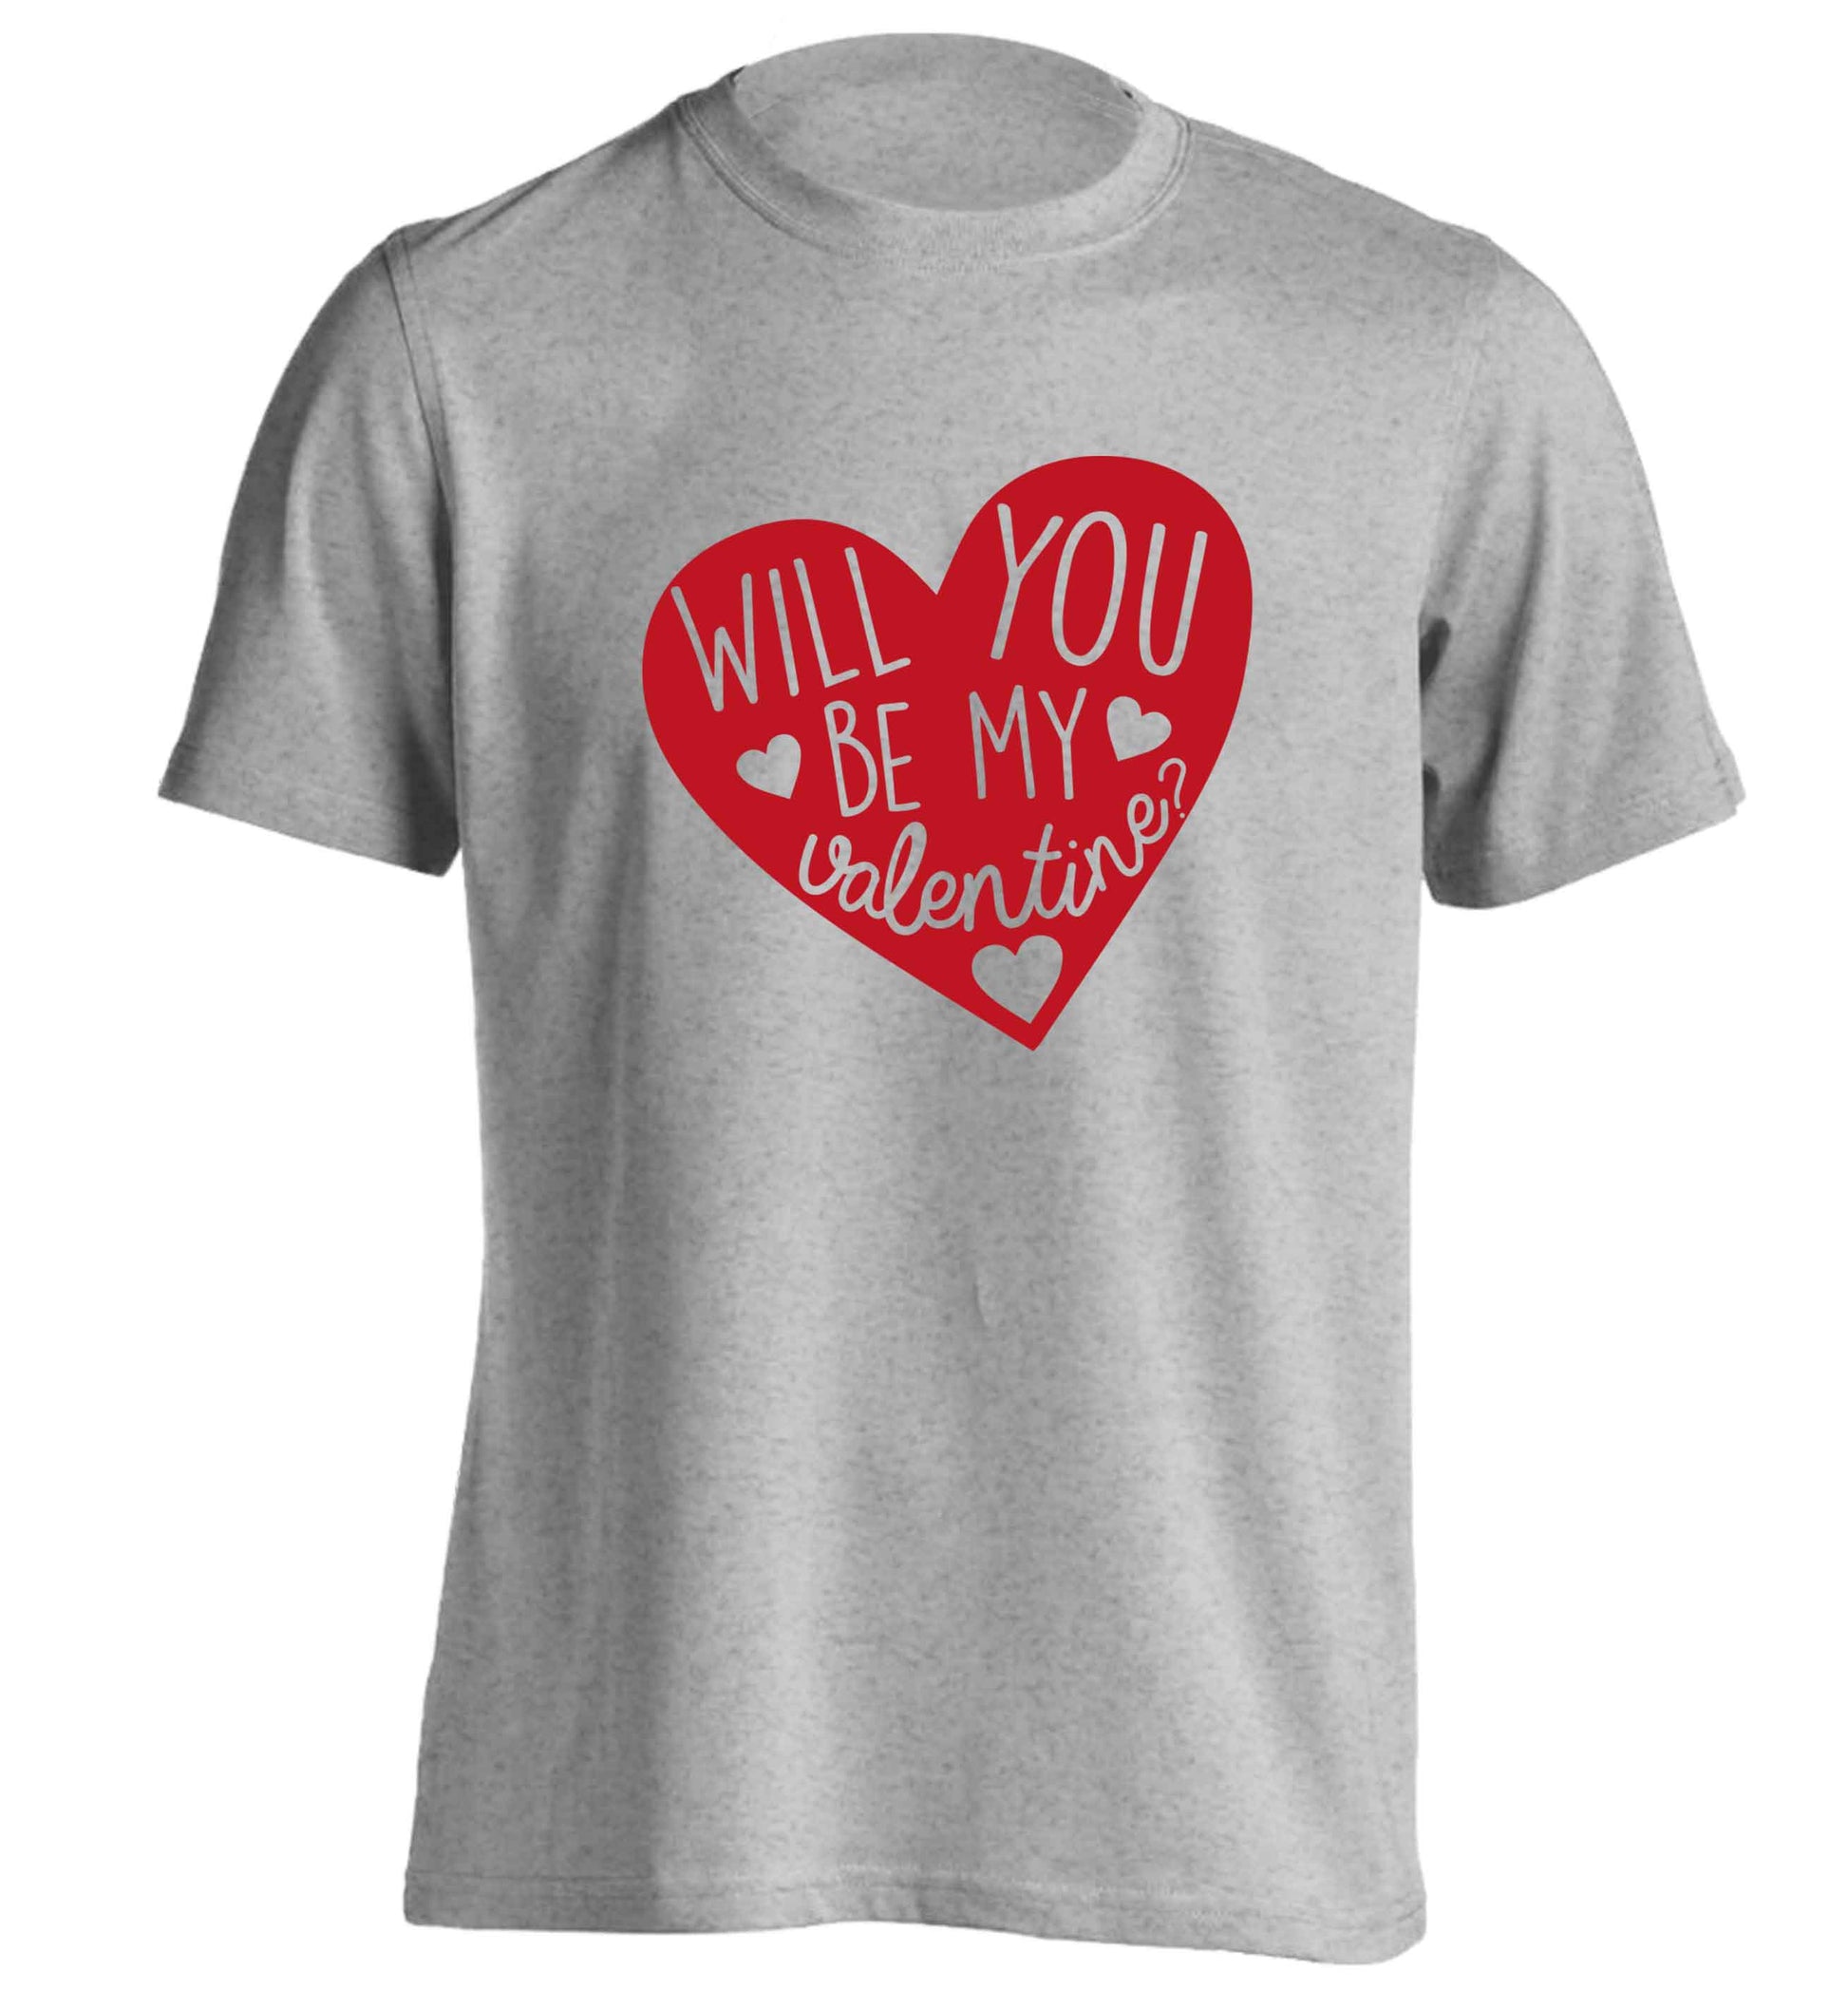 Will you be my valentine? adults unisex grey Tshirt 2XL